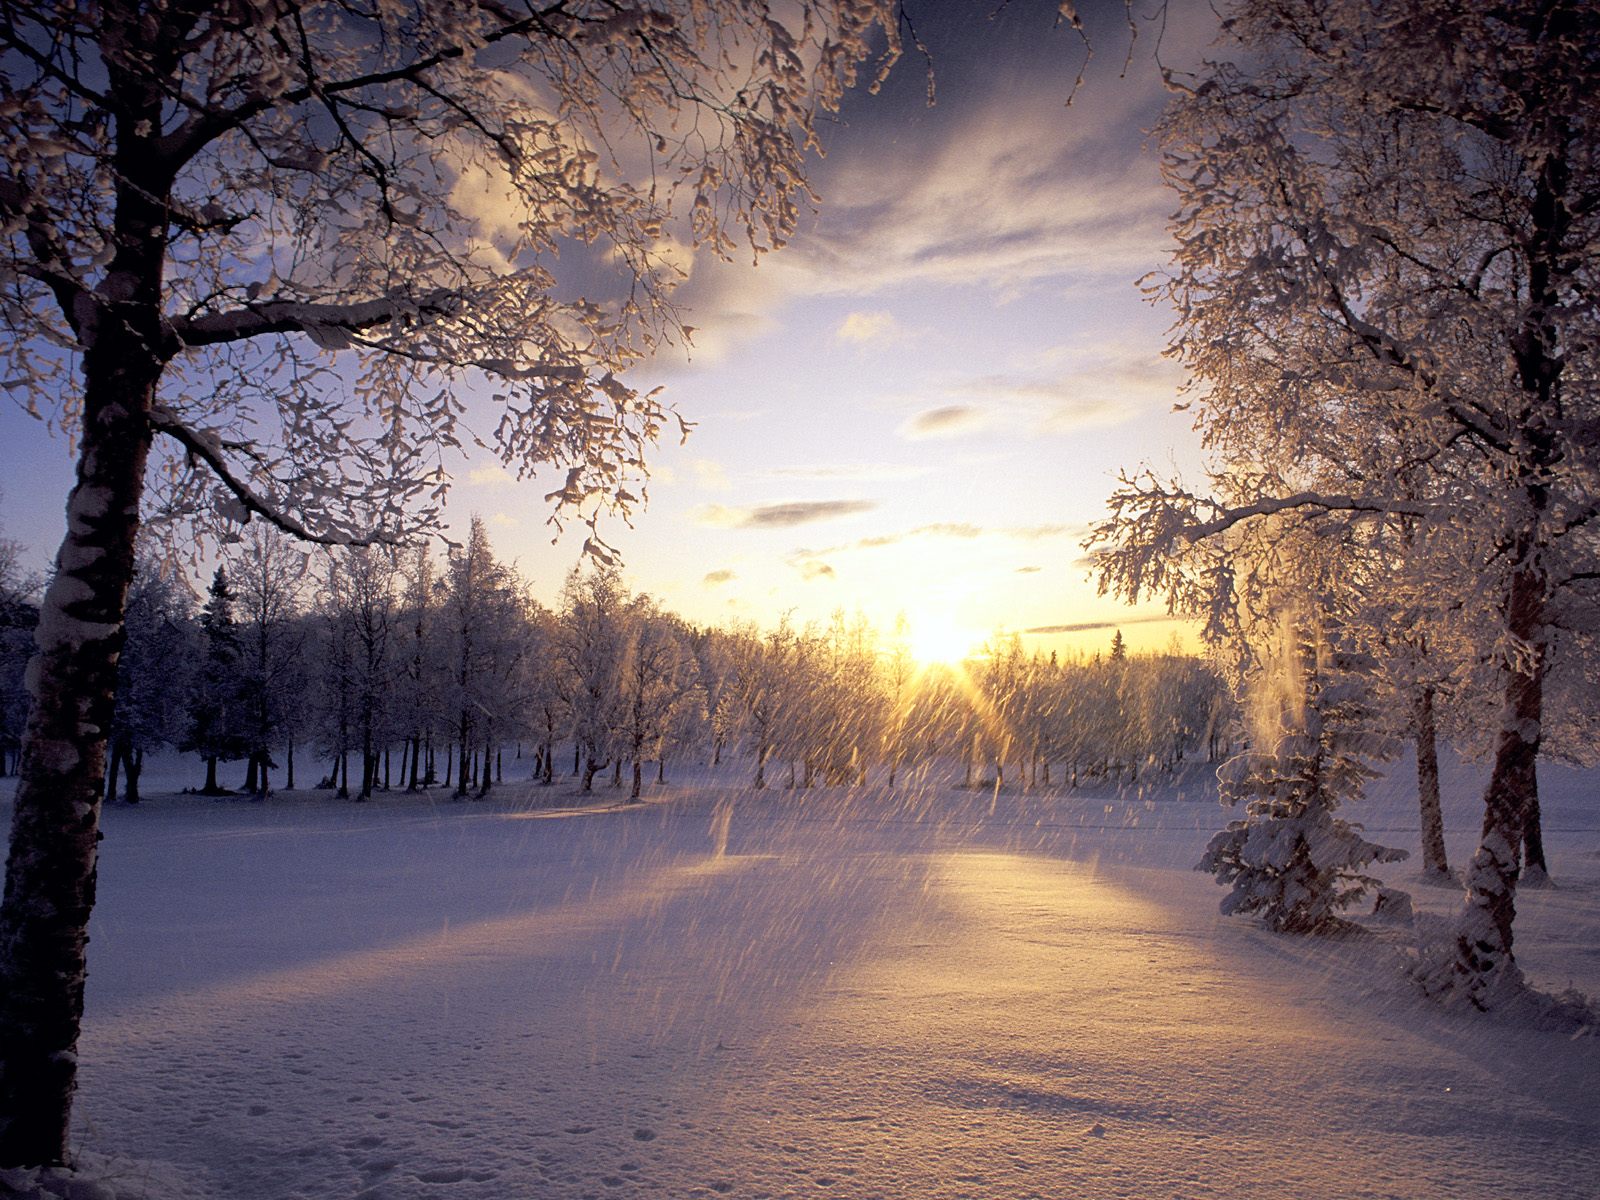 Silent winter sunset over snowy landscape